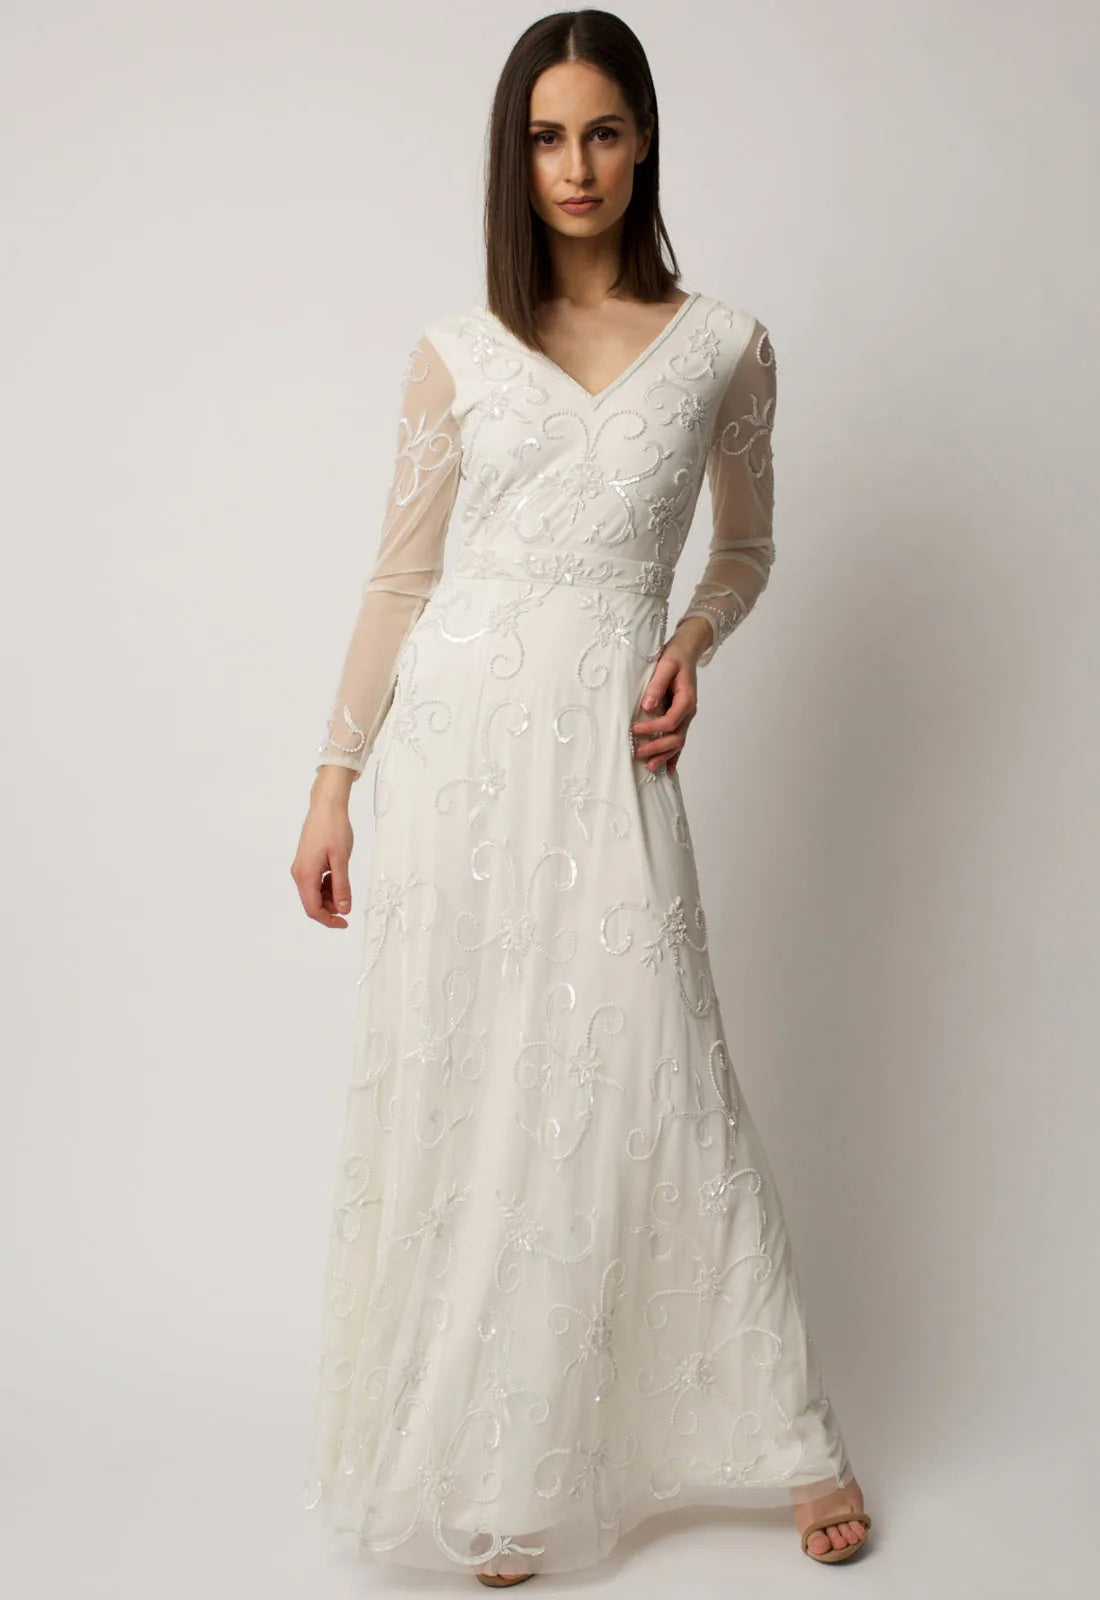 Raishma White Jayne Bridal Dress gown